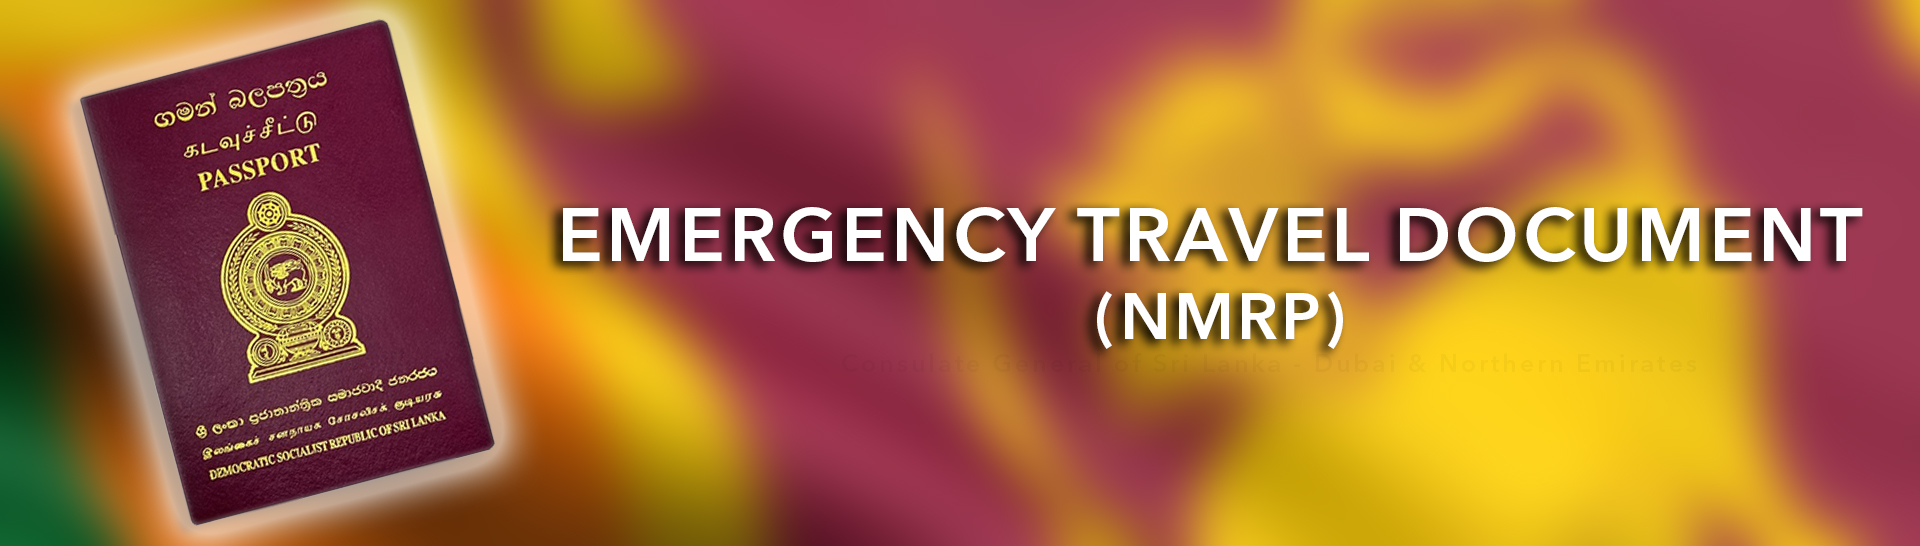 Emergency Travel Document Nmrp